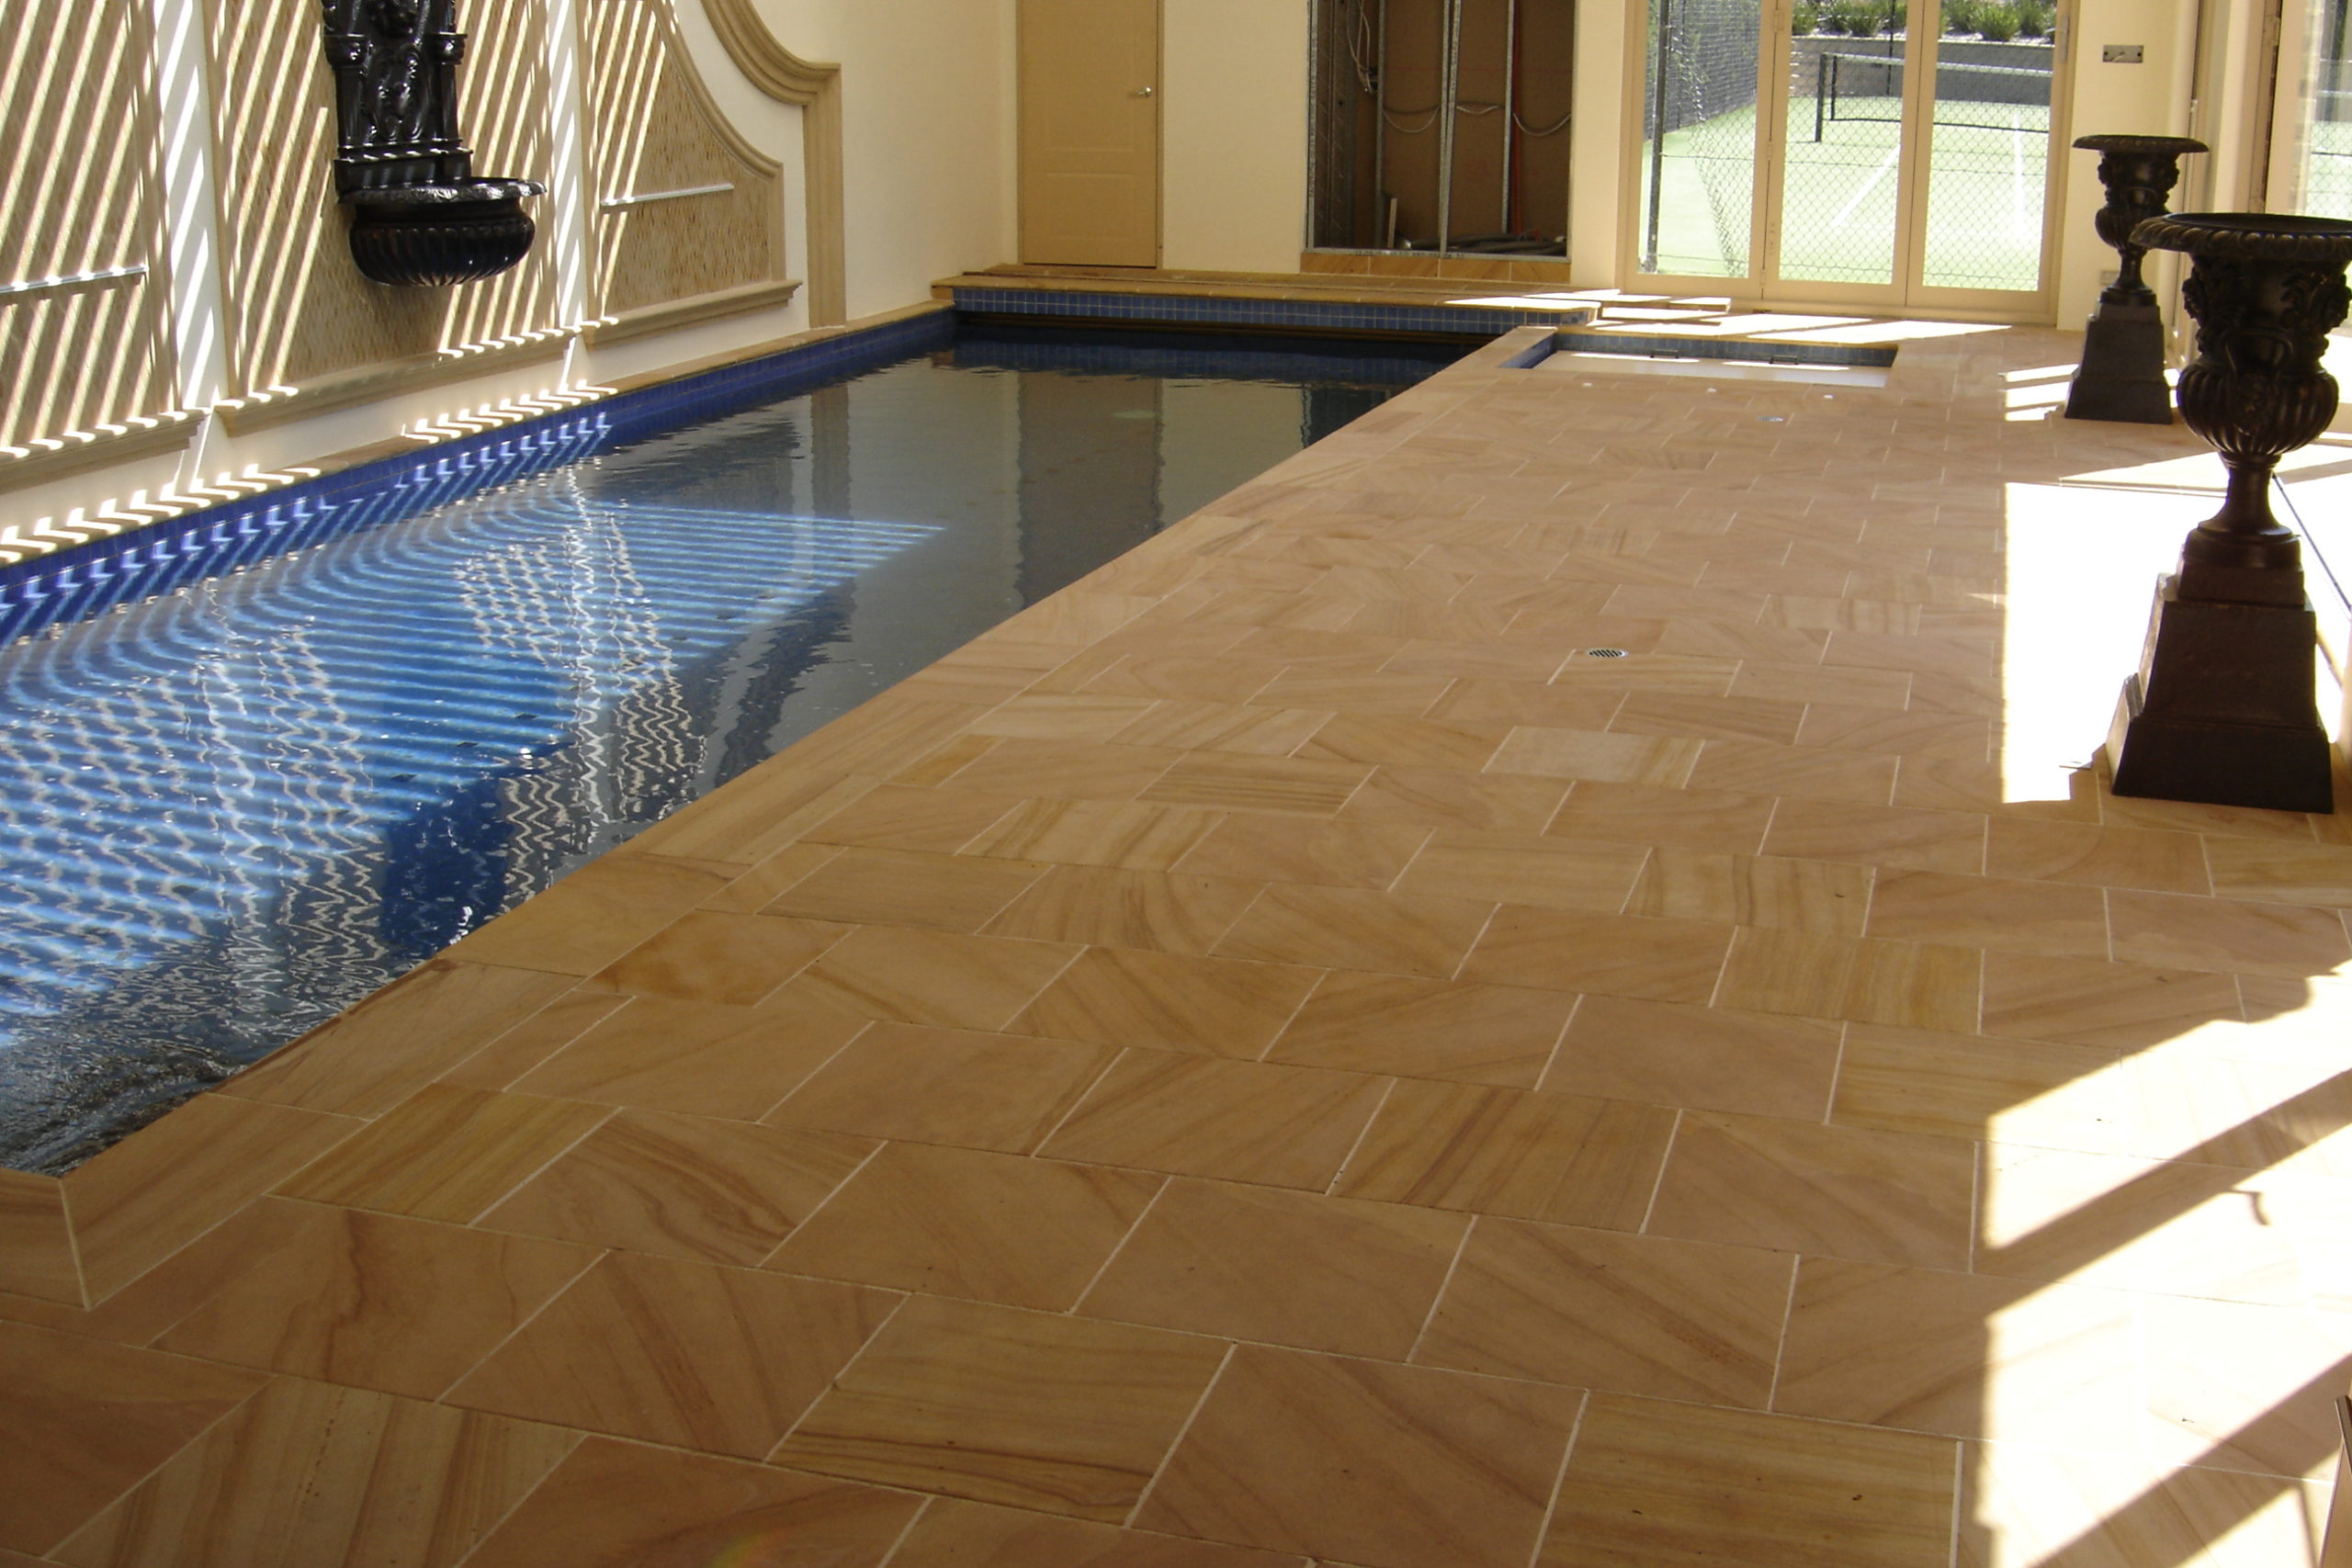 Sandstone flooring scaled